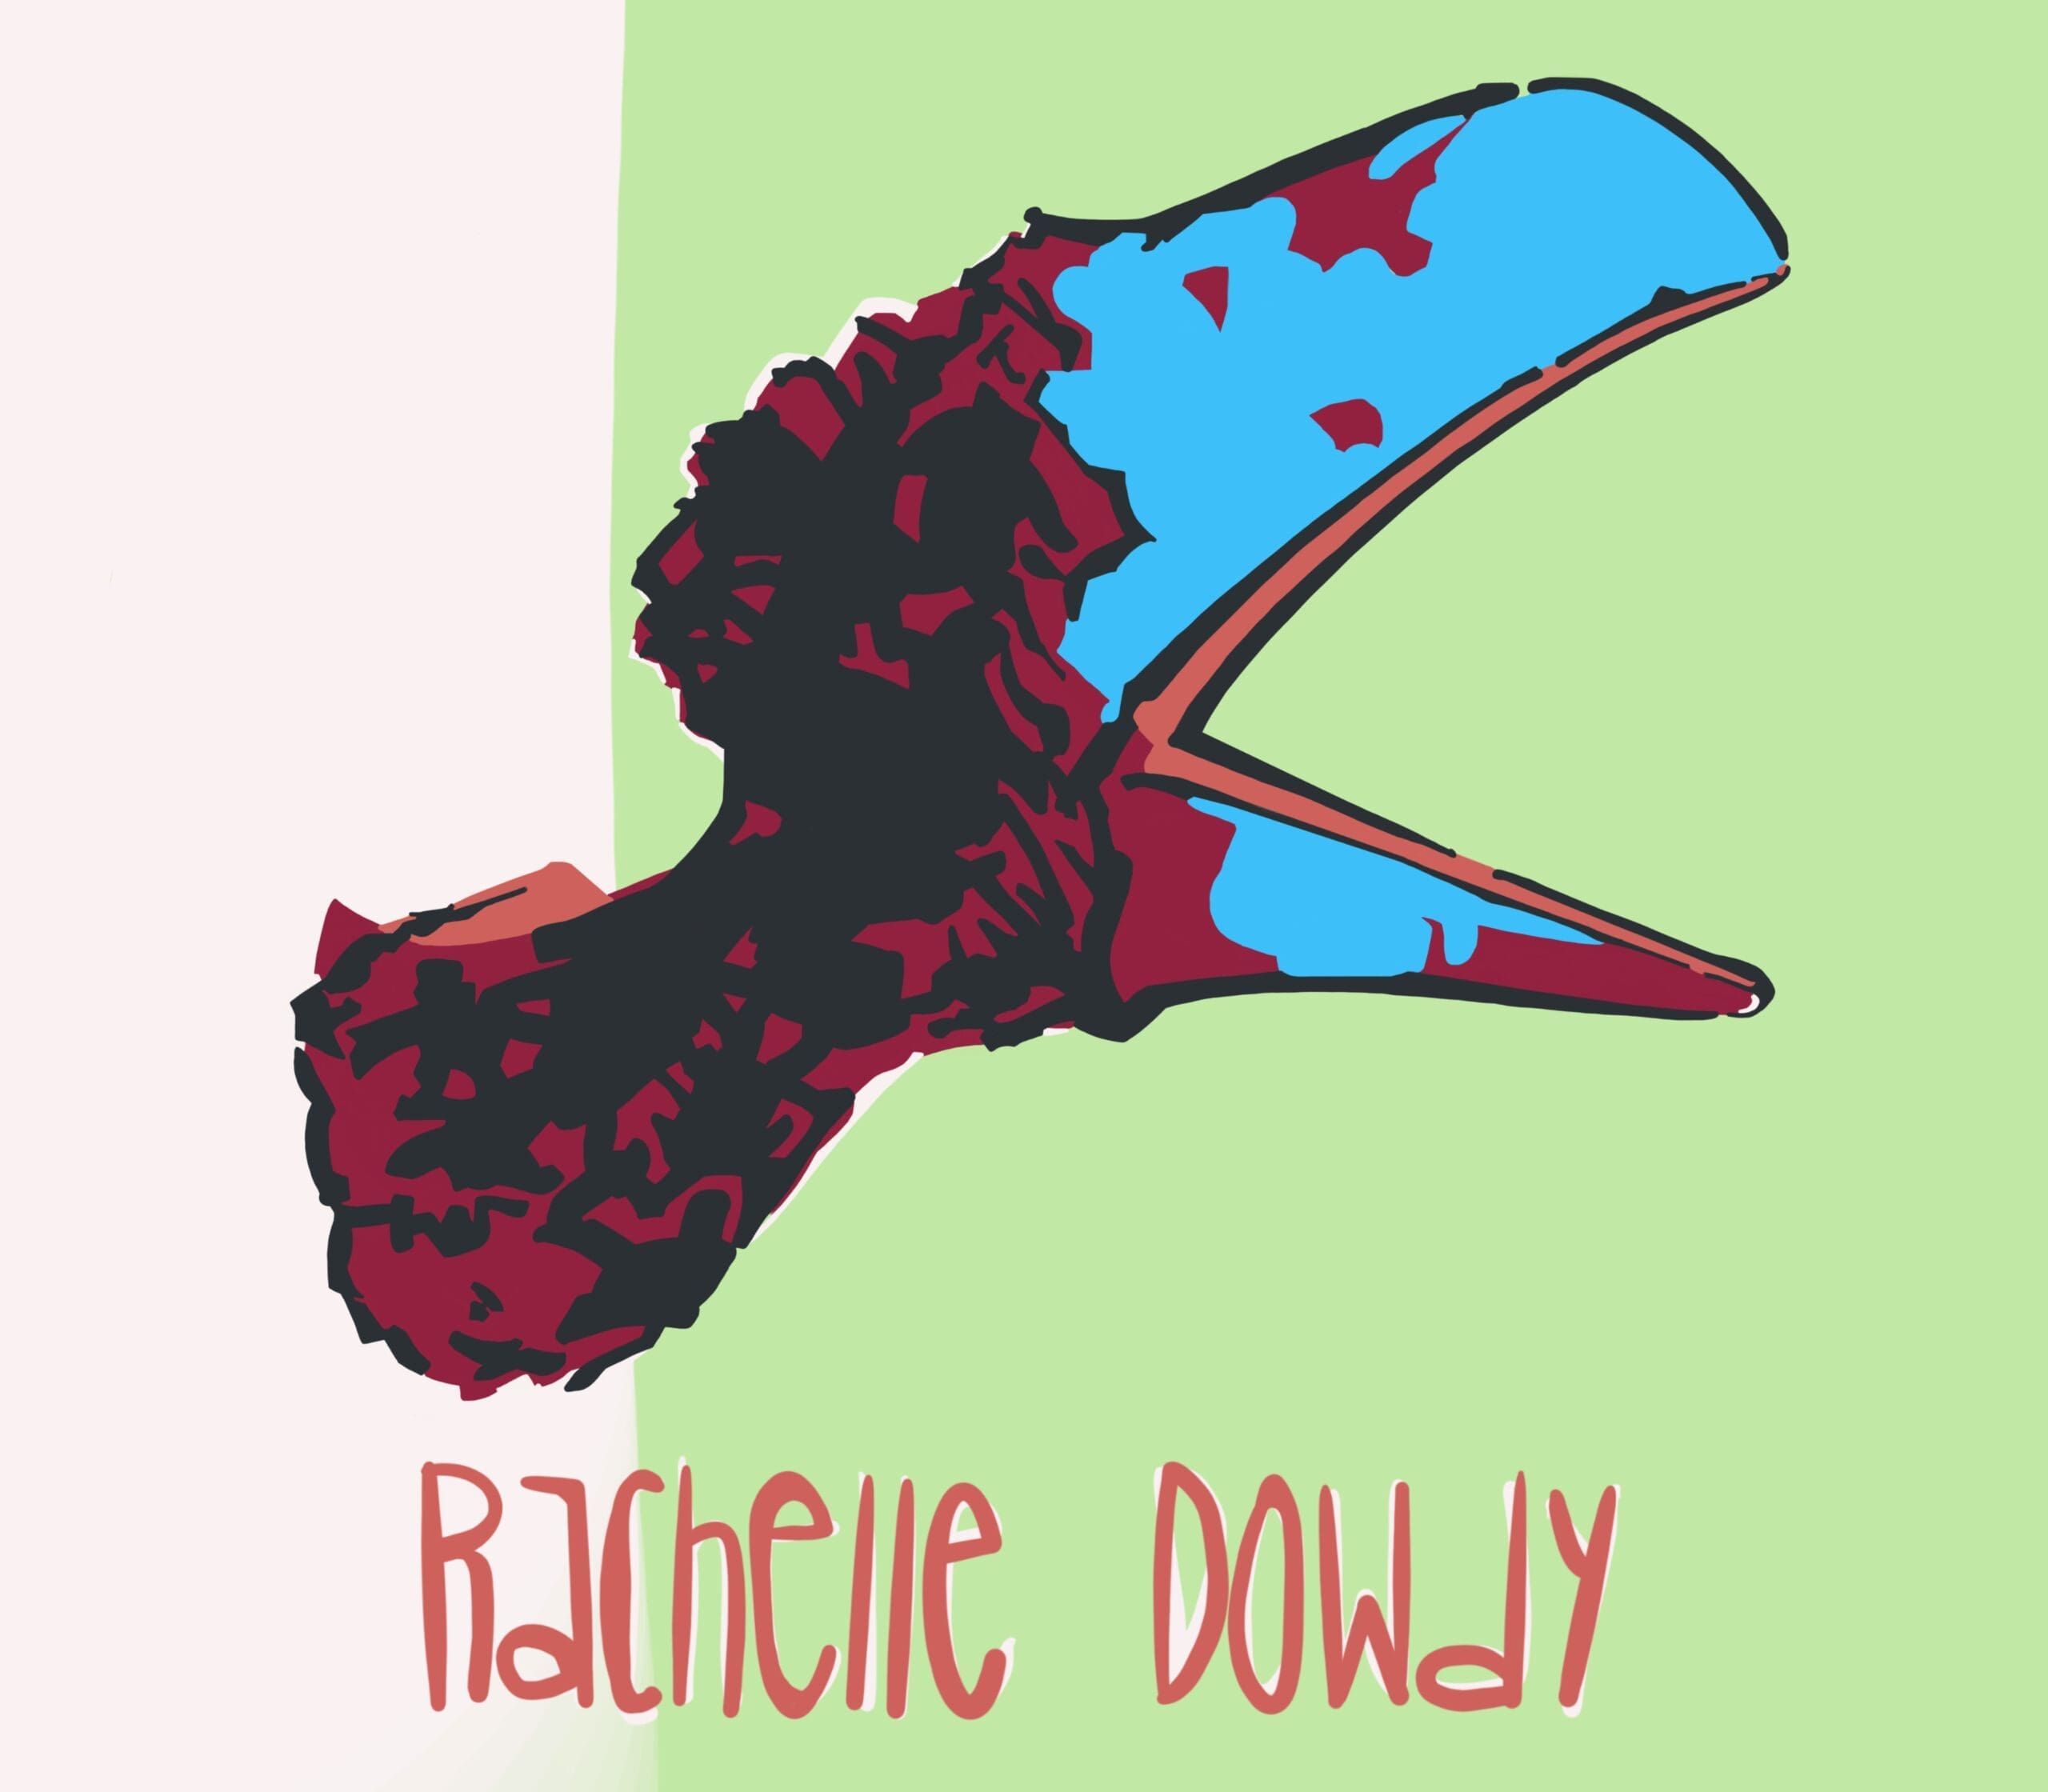 Rachelle Dowdy logo